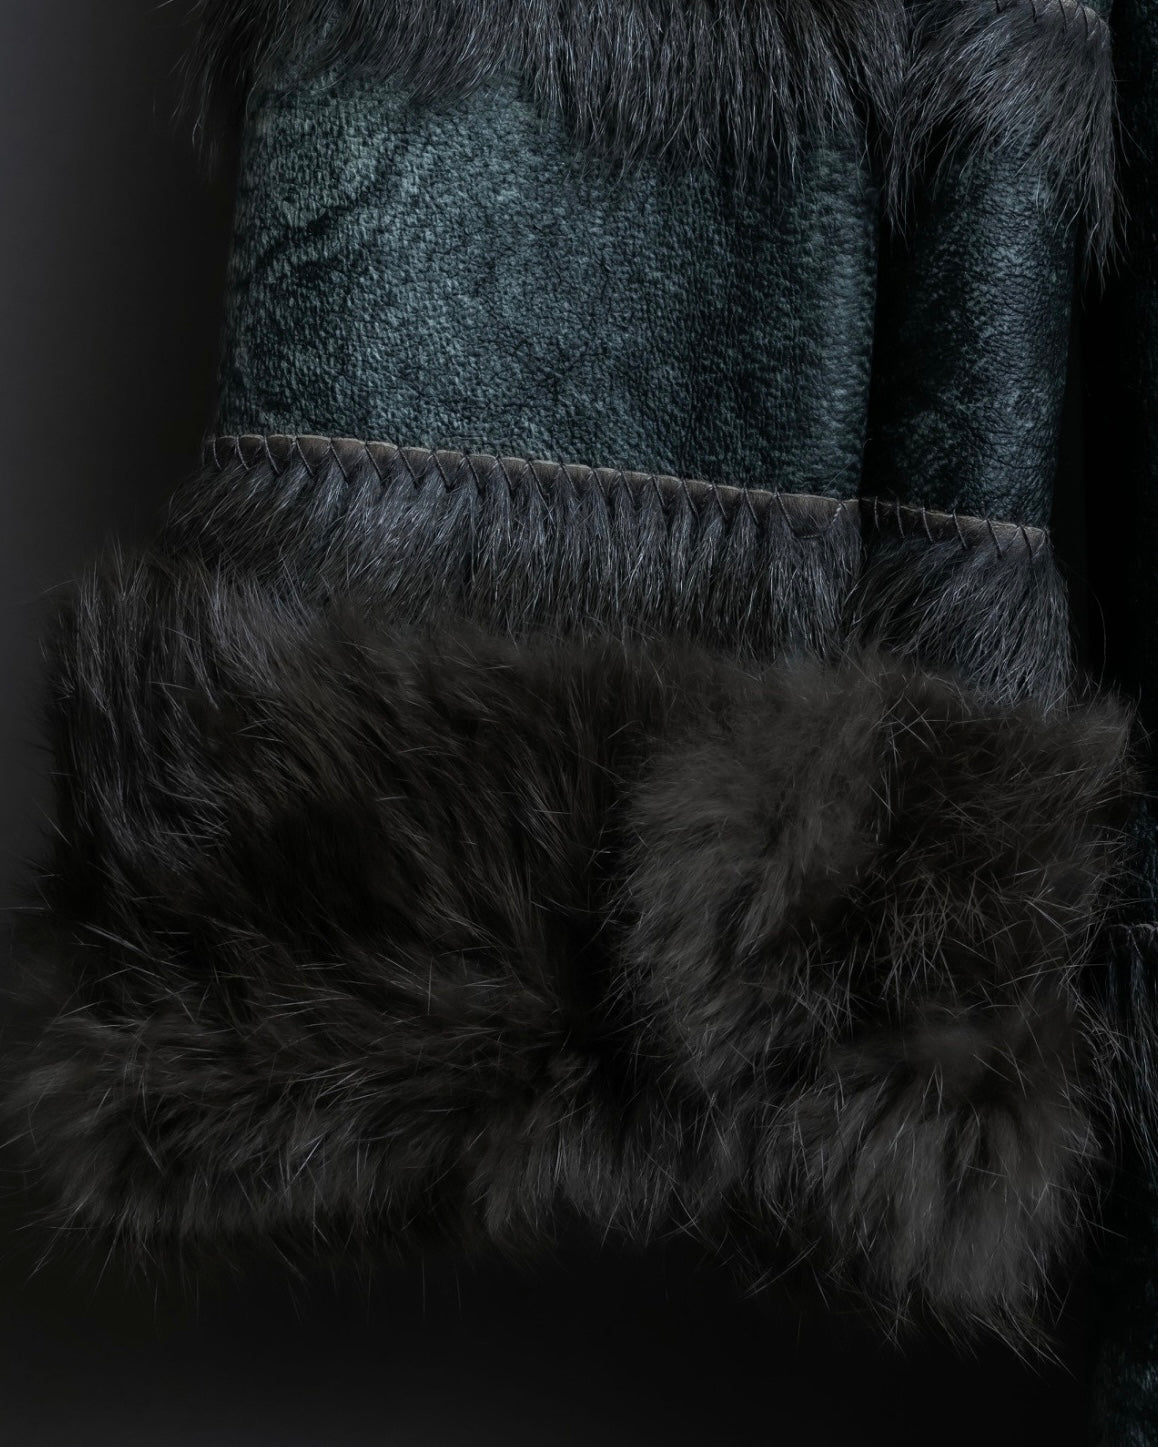 Vintage Rabbit & Fox Real Fur Coat